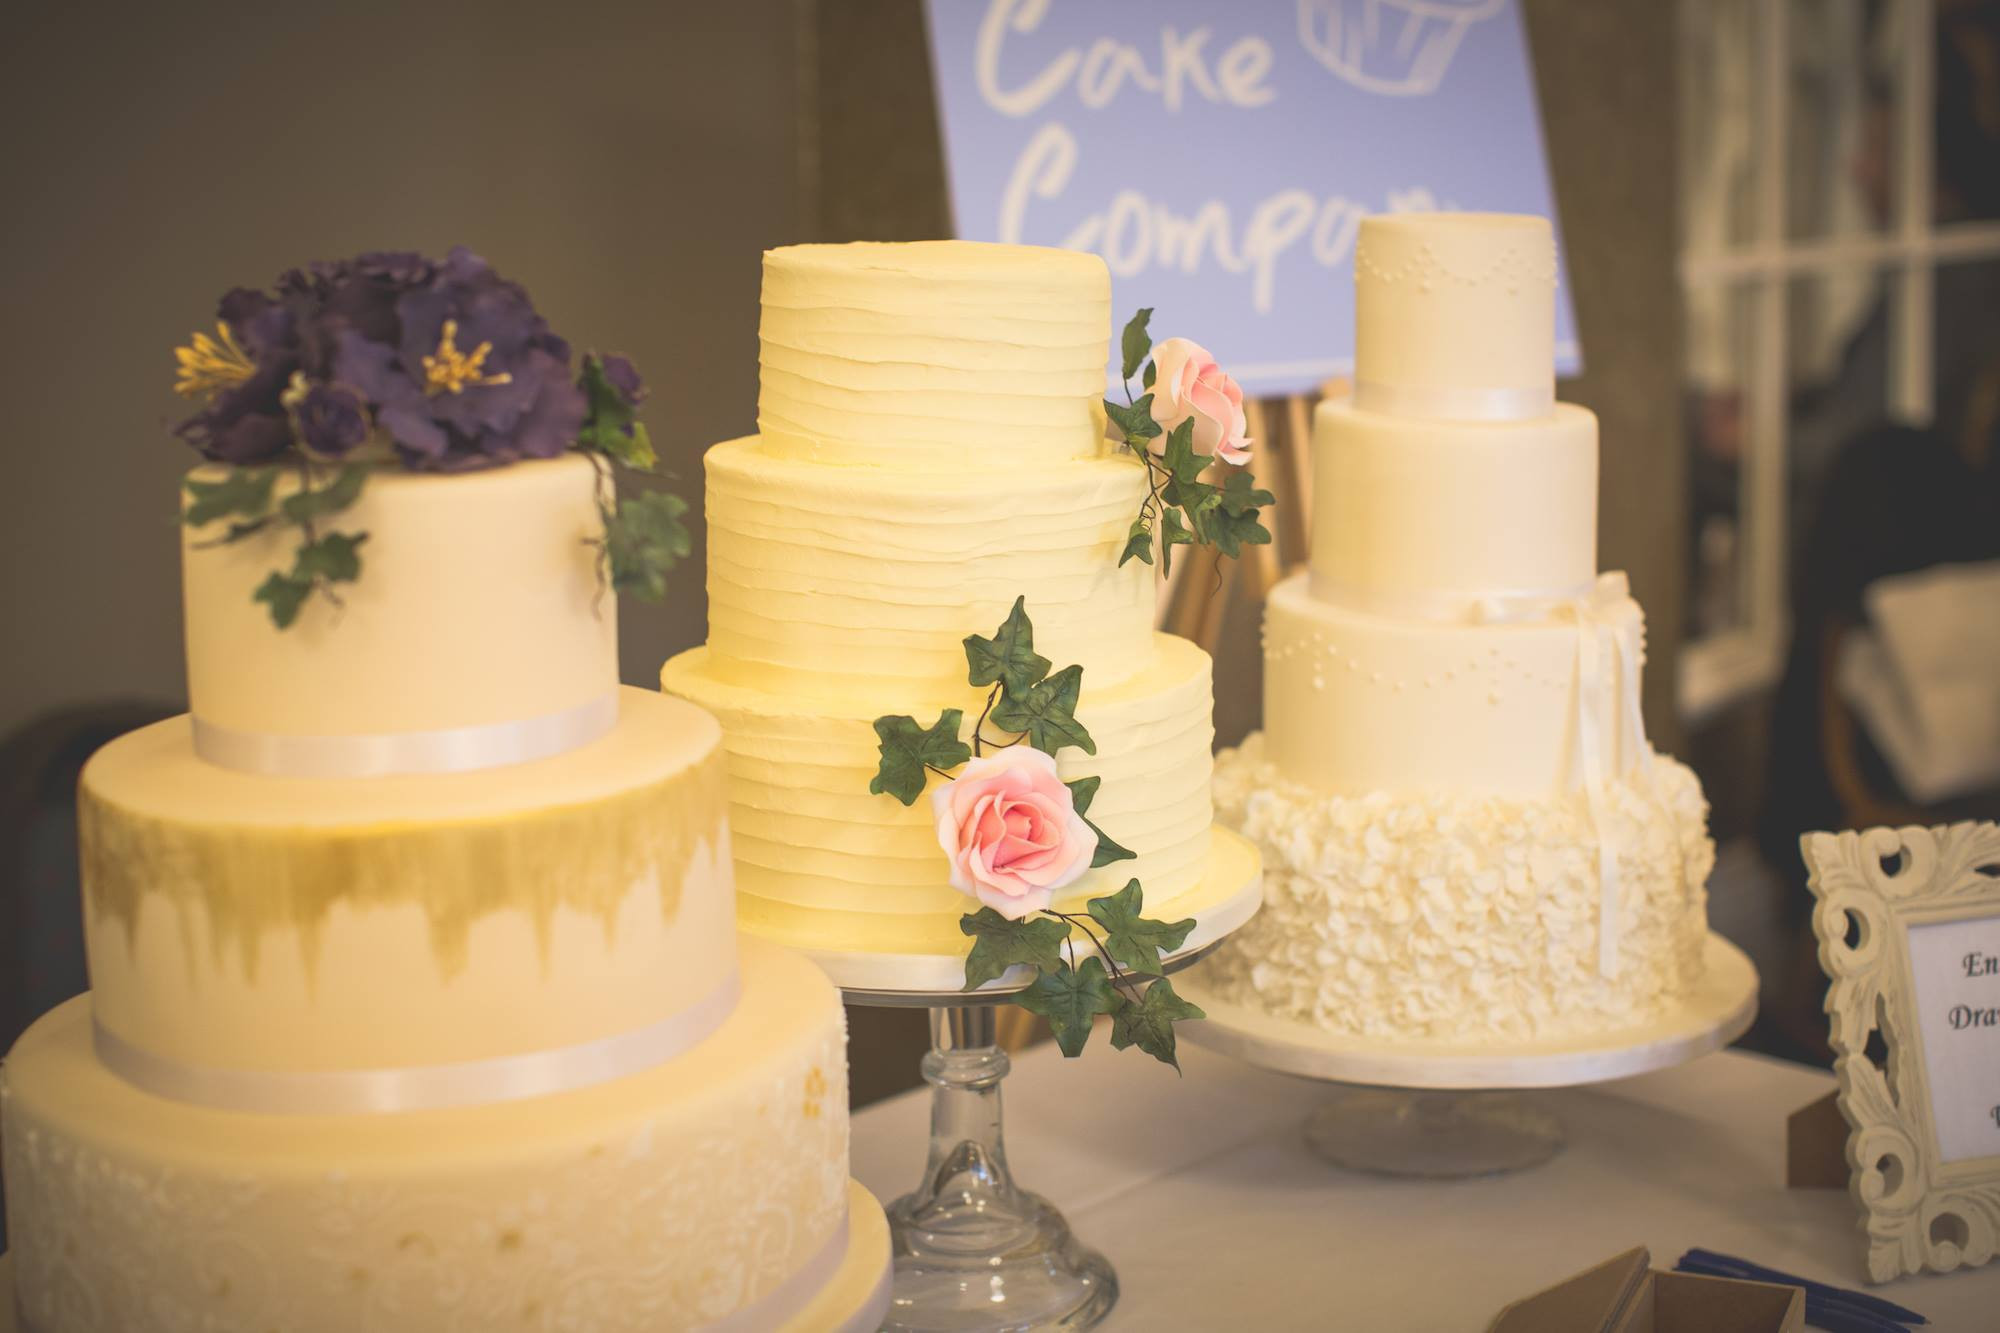 Food City Wedding Cakes
 Stunning wedding cakes by the Bath Cake pany